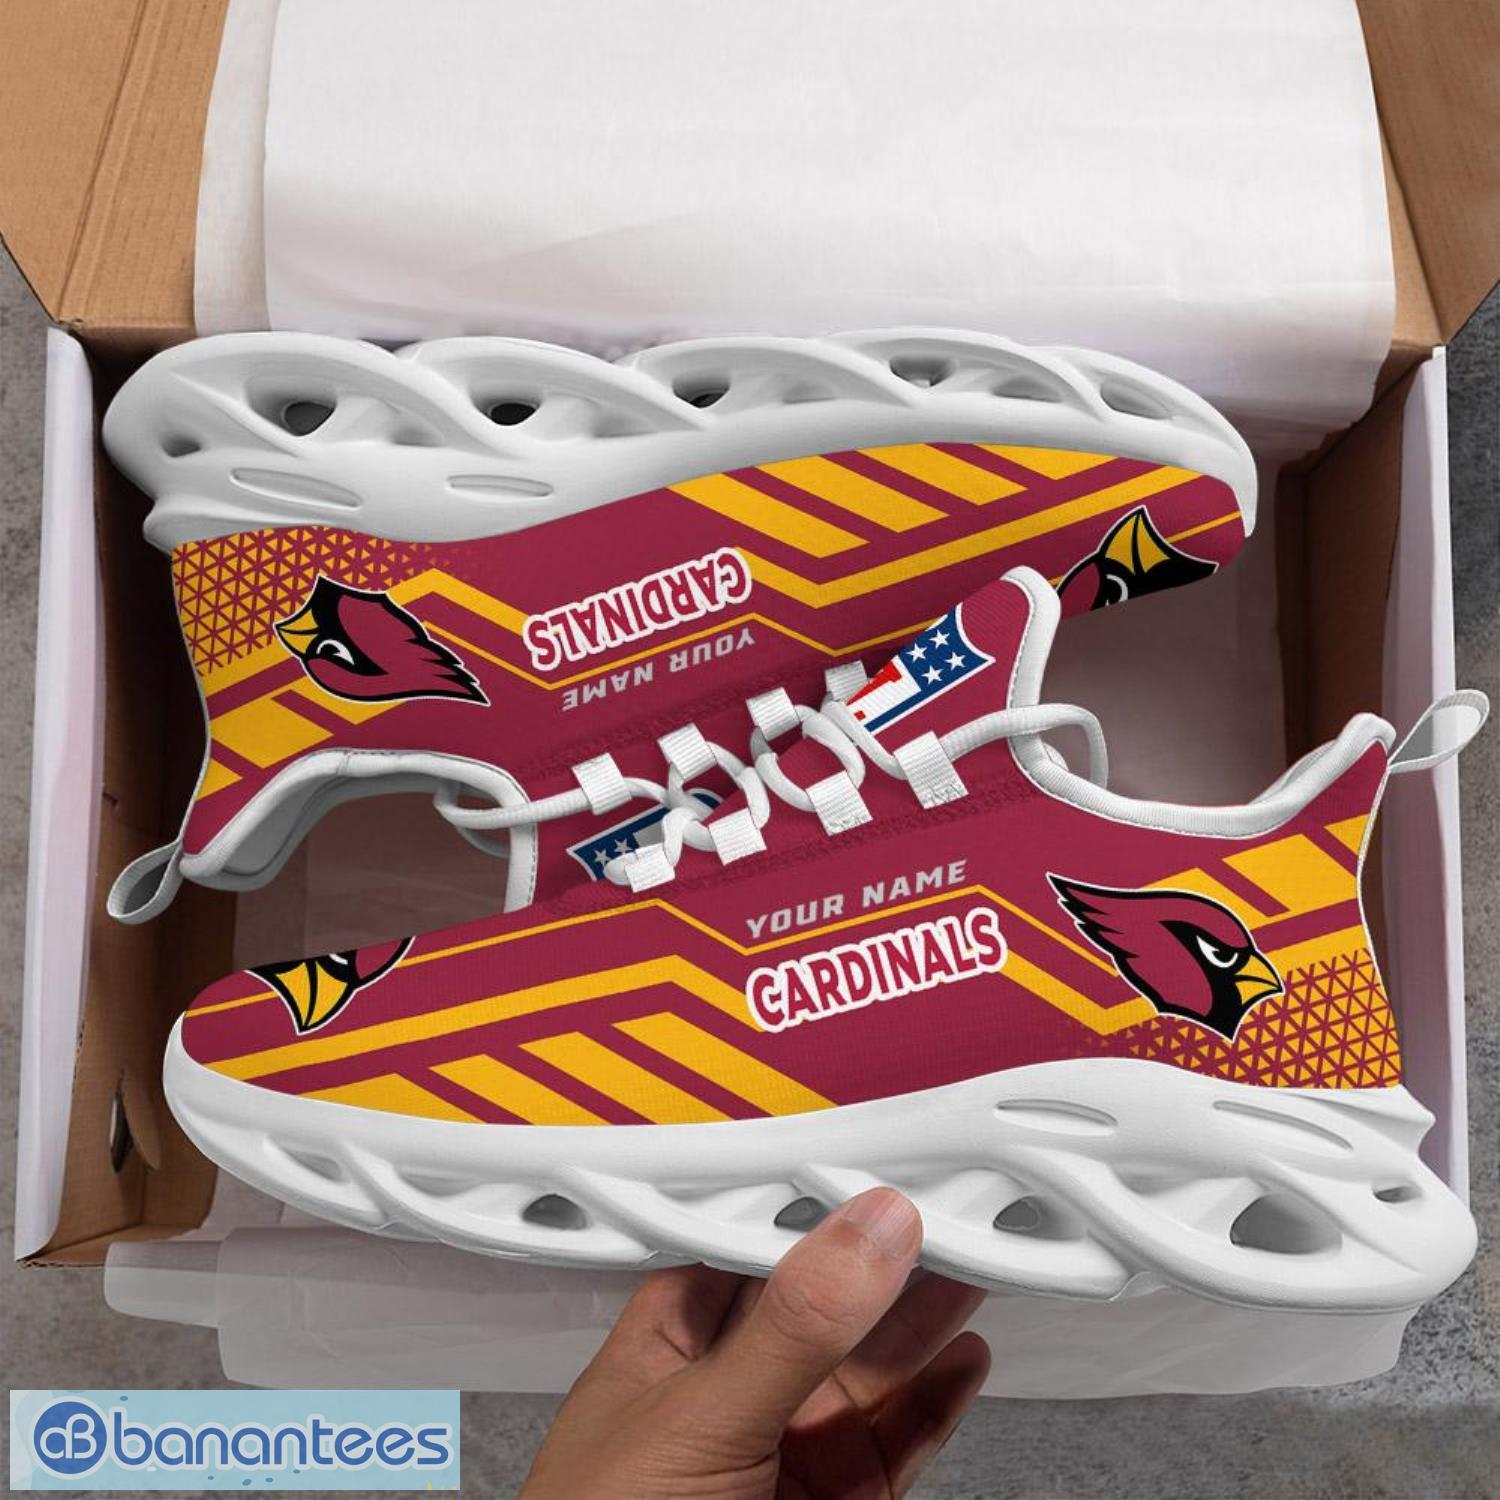 Arizona Cardinals NFL Max Sou Sneakers Running Shoes - Banantees